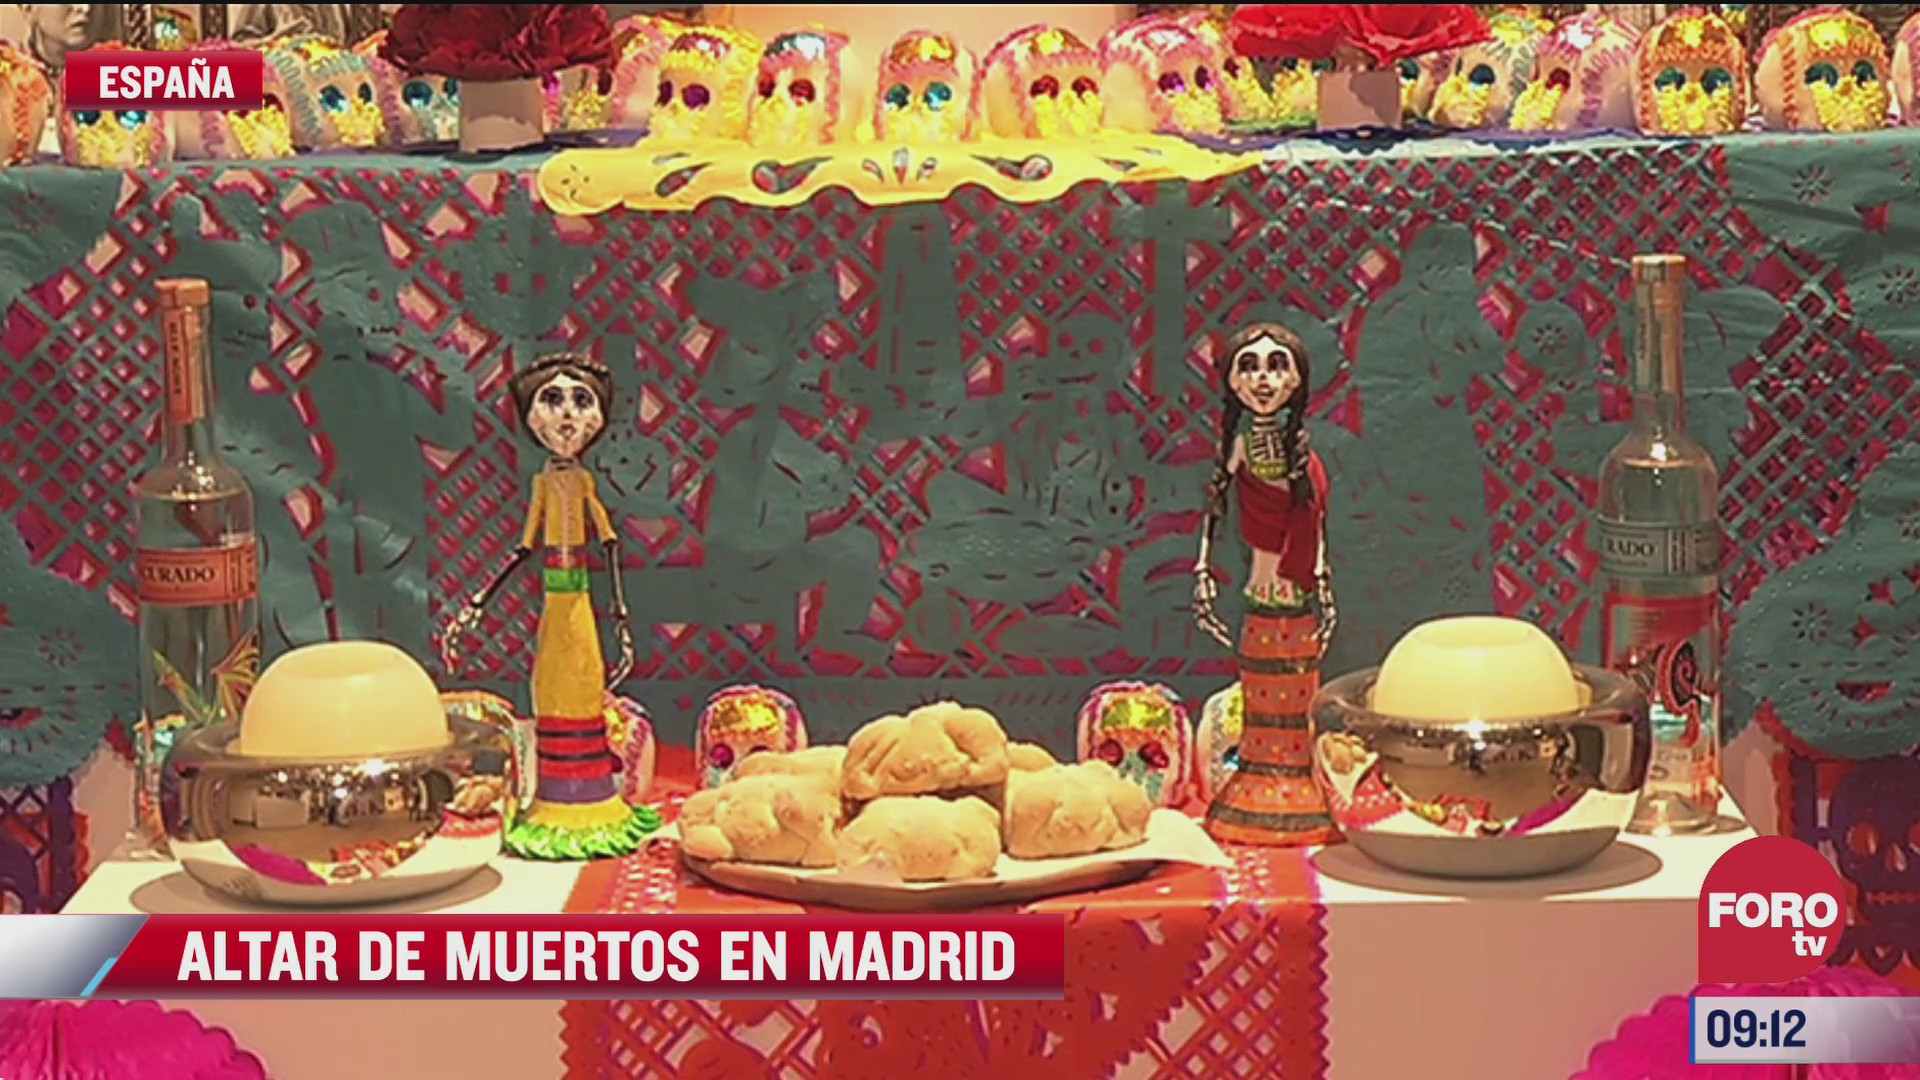 altar de muertos la tradicion mexicana que levanta gran expectacion en en madrid espana